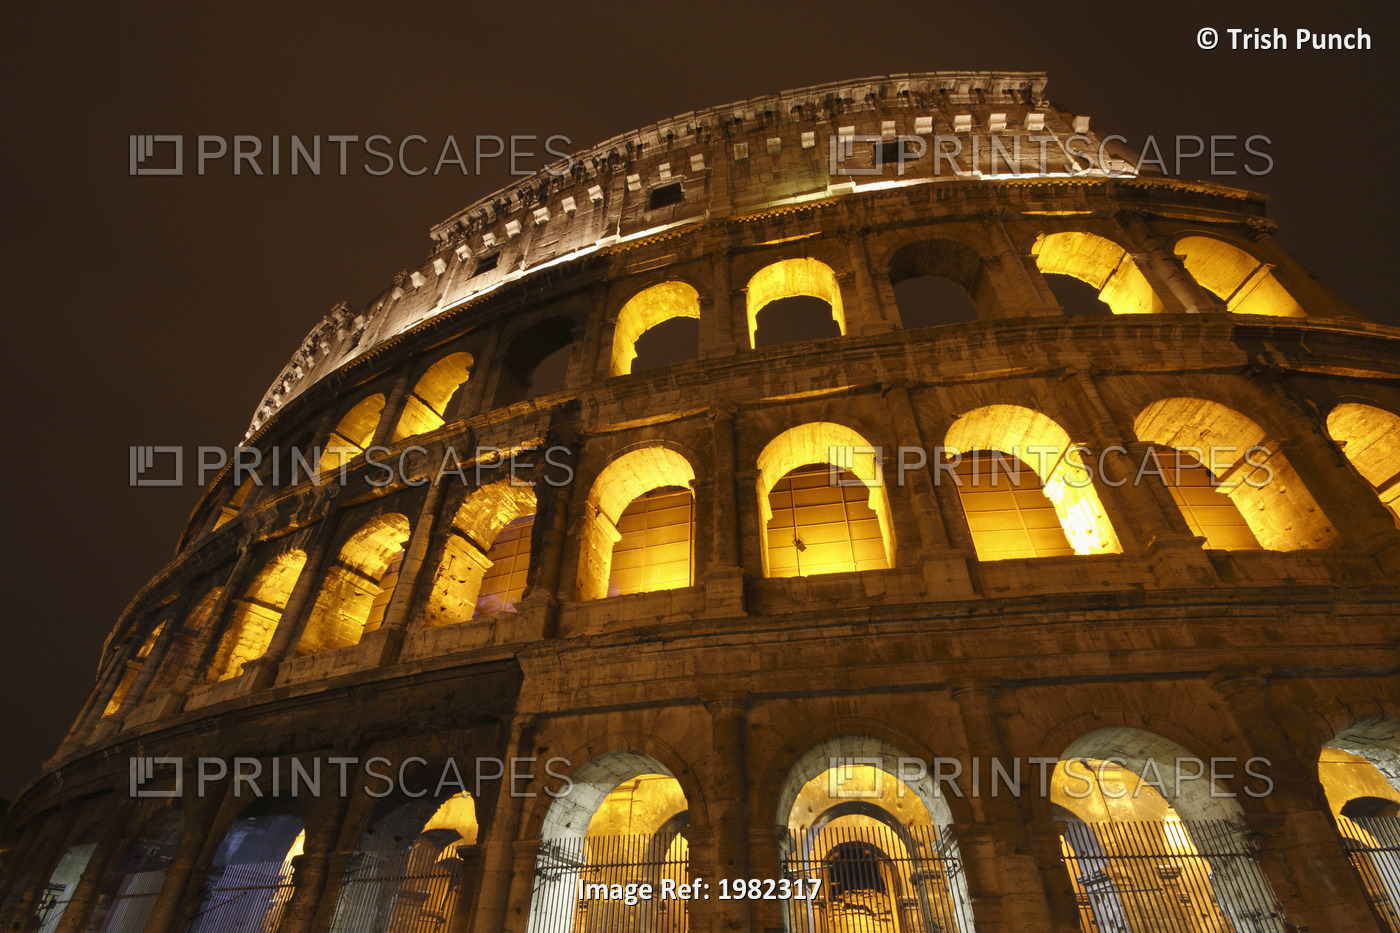 Night Lights Of The Colosseum; Rome Lazio Italy